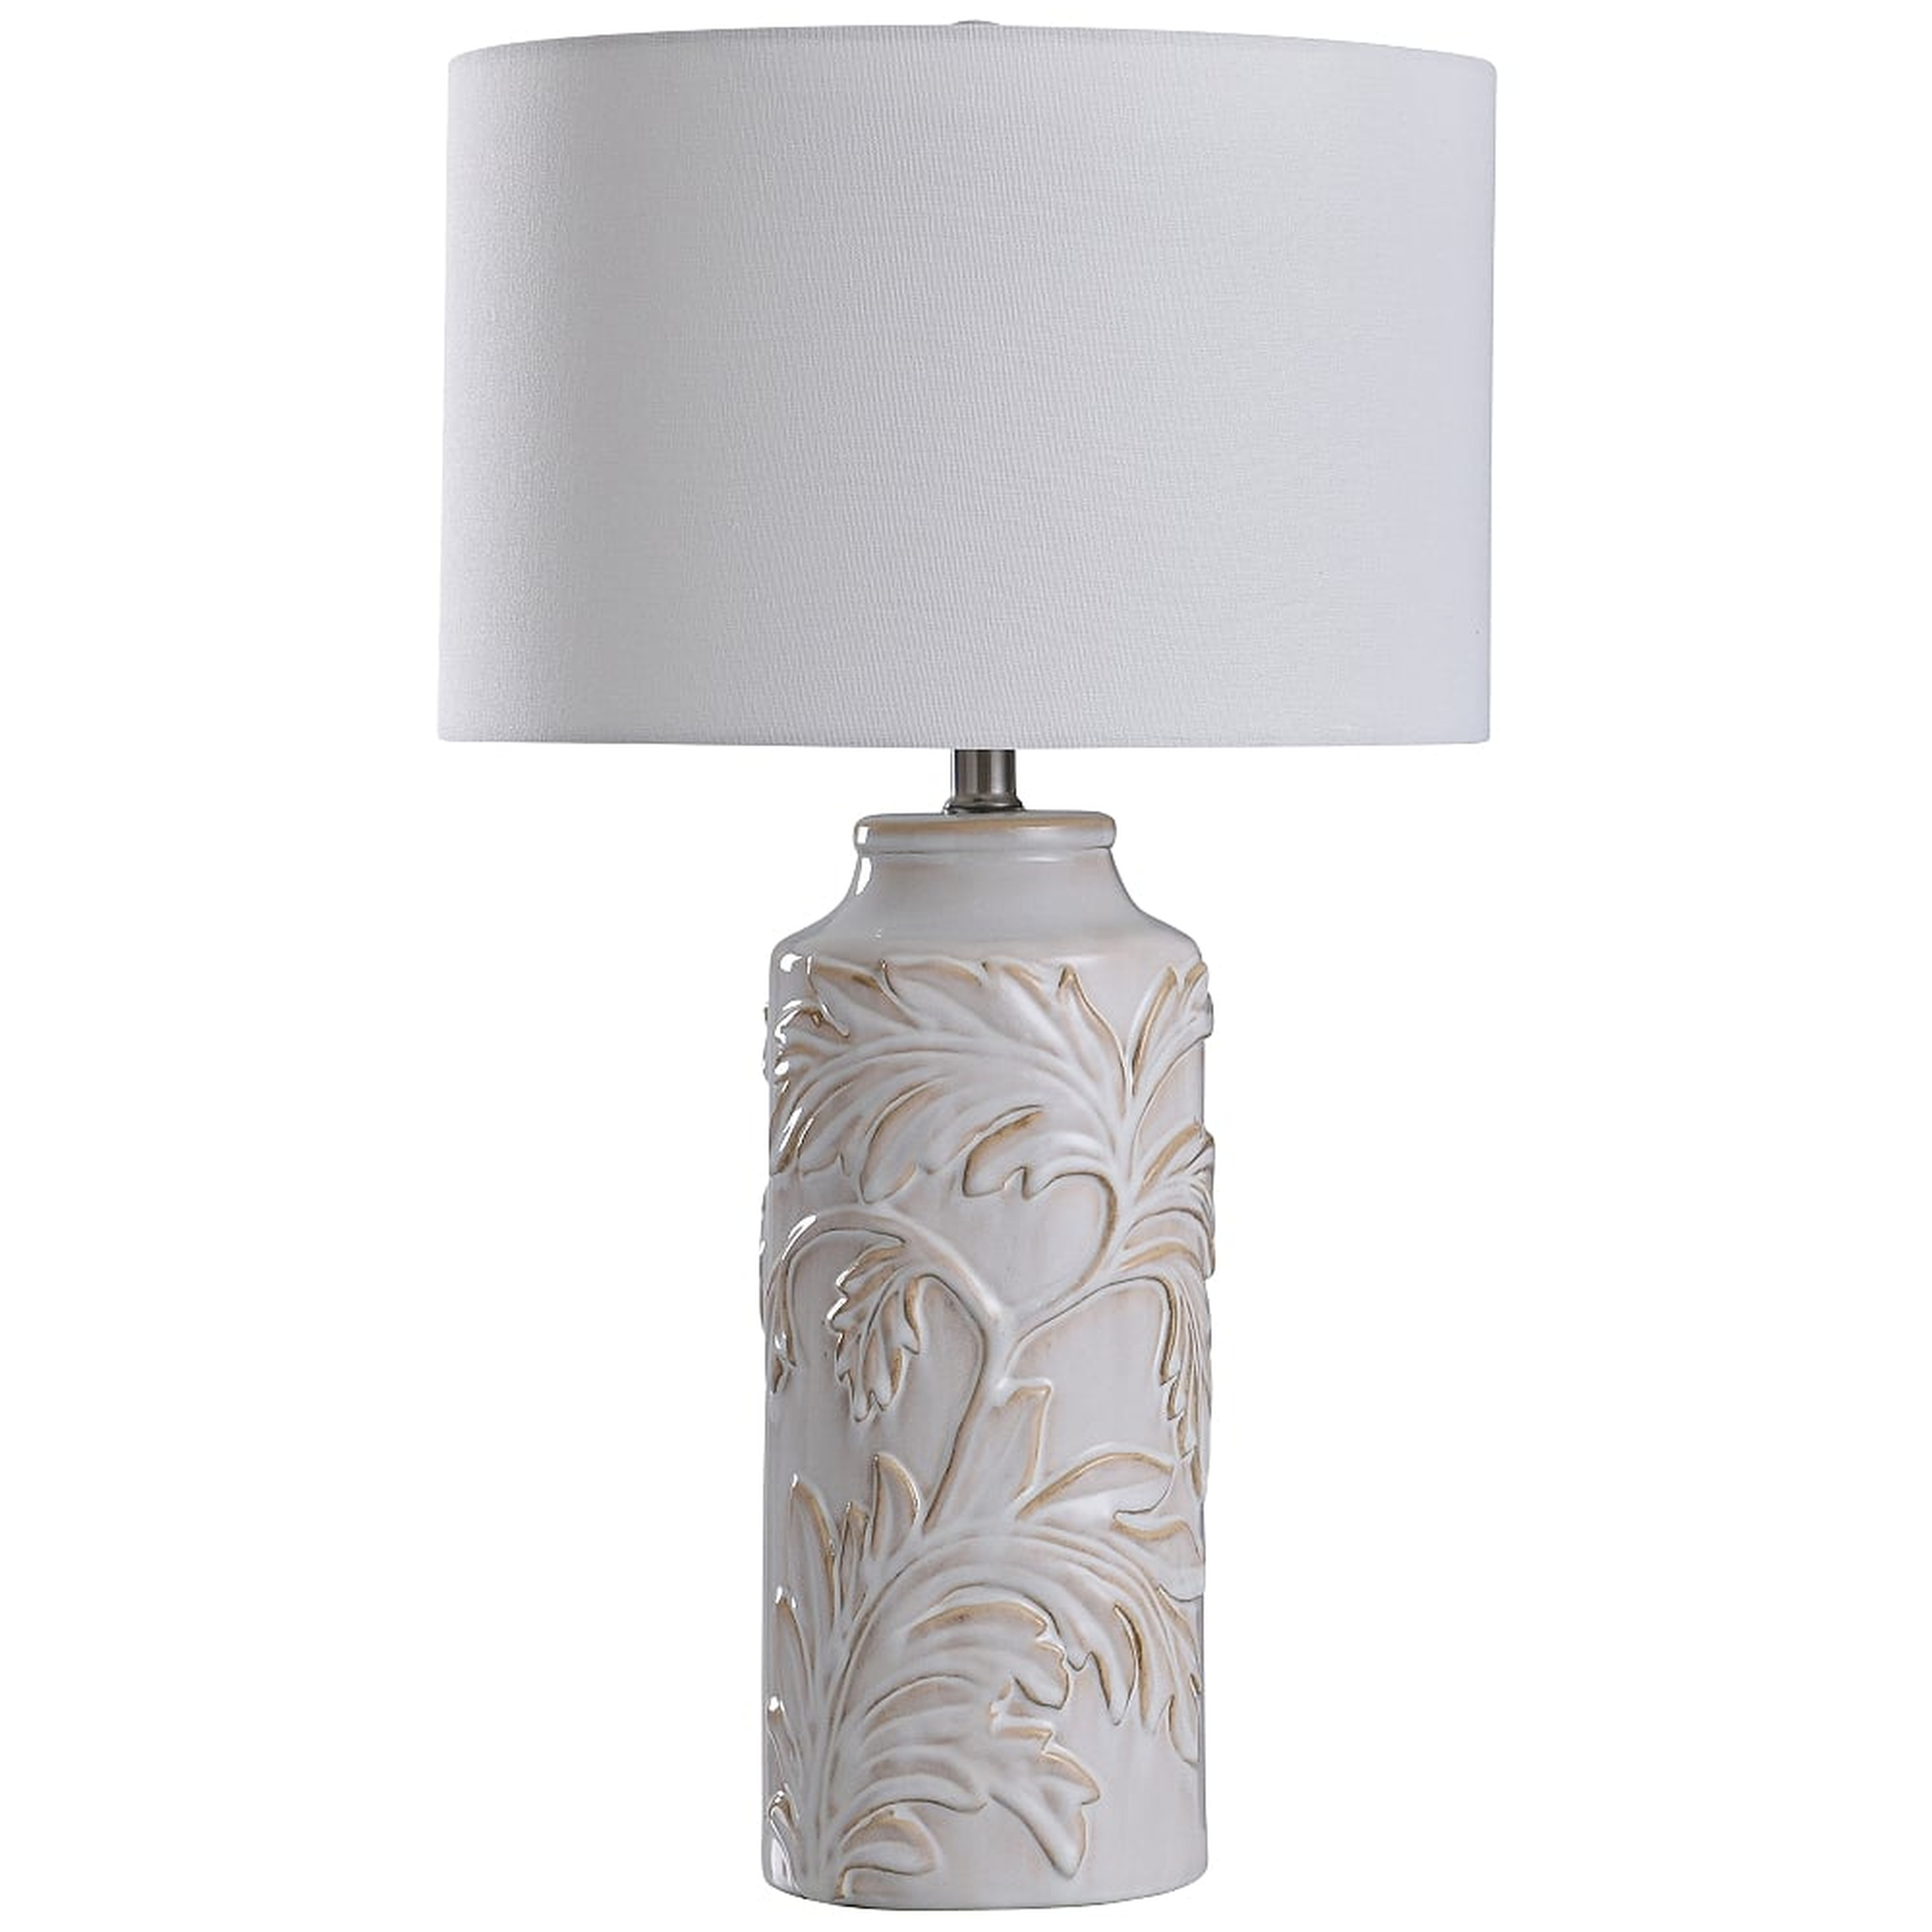 Mirfield Beige Textured Ceramic Table Lamp - Style # 69C33 - Lamps Plus